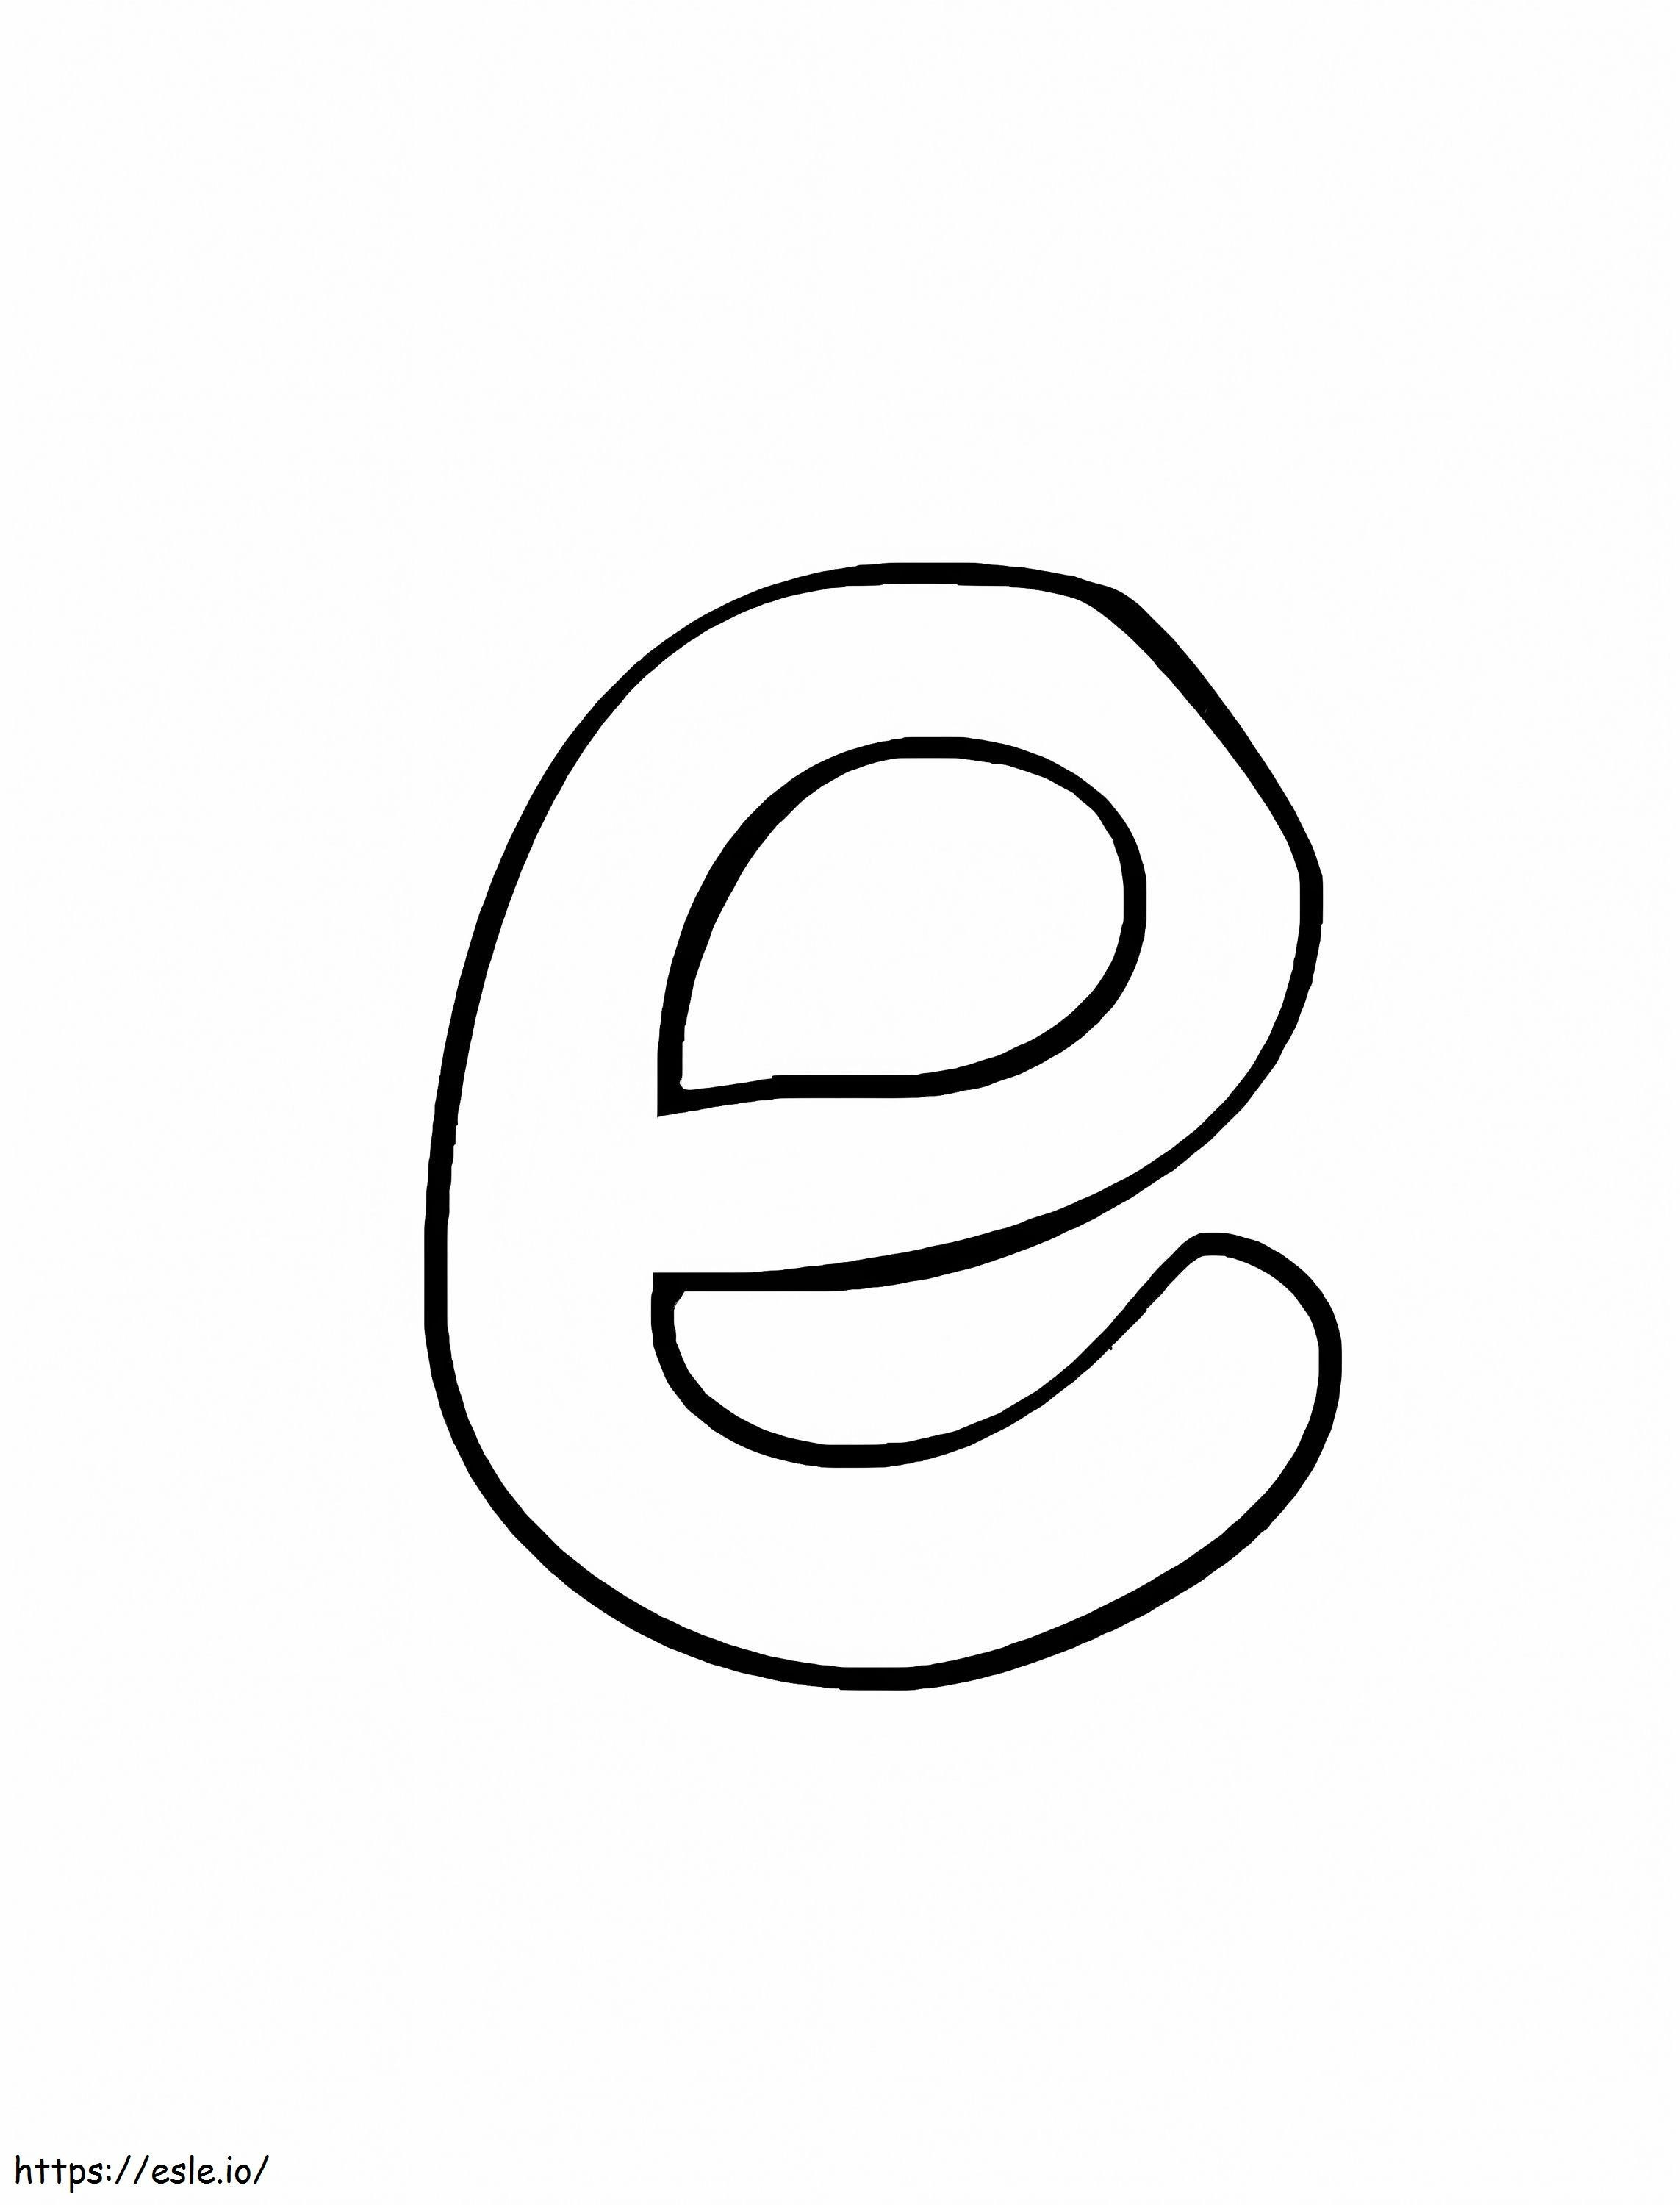 Litera E 1 de colorat